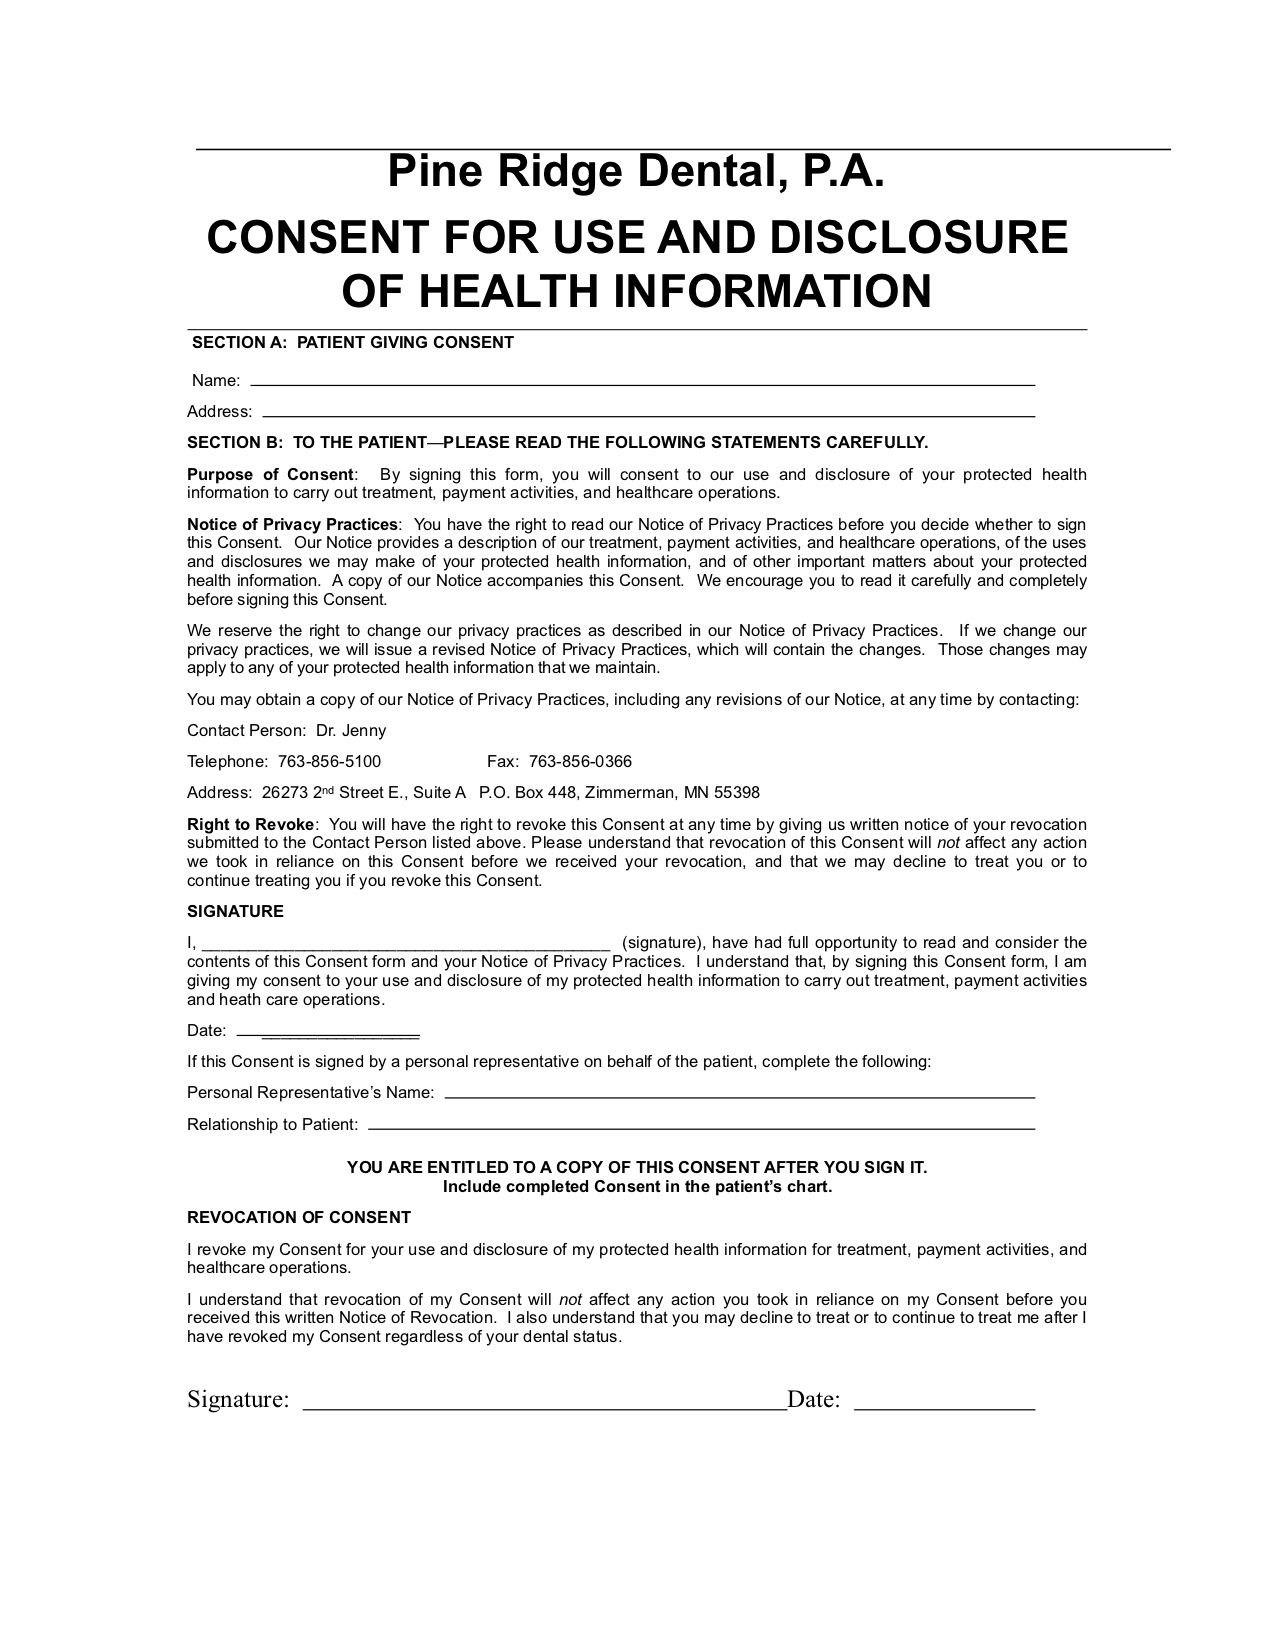 HIPPA PRIVACY-consent form Pine Ridge Dental Zimmerman, Minnesota